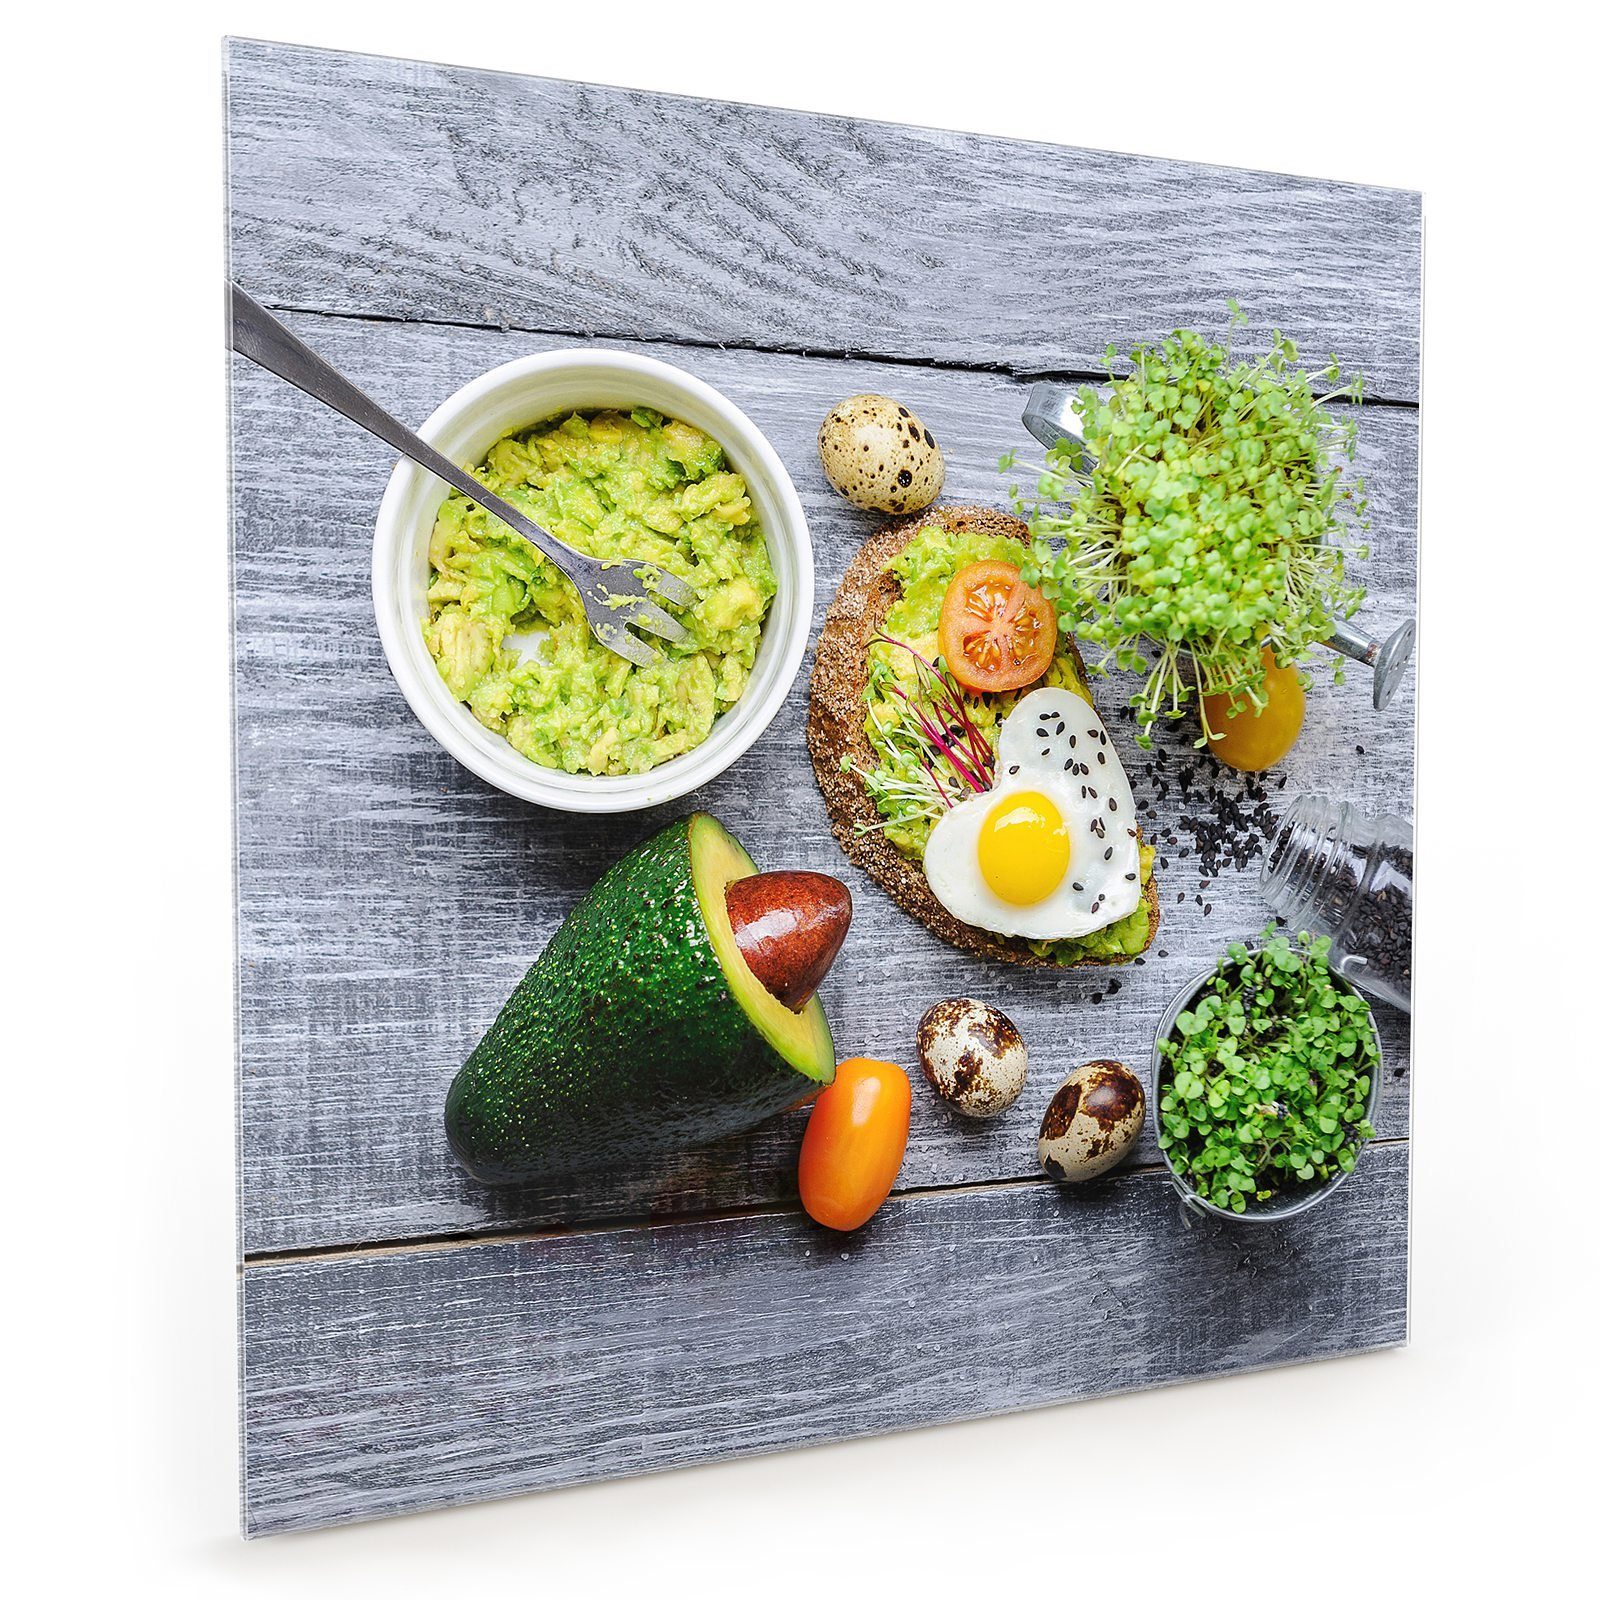 Mousse Küchenrückwand Primedeco Spritzschutz mit Avocado Motiv Glas Küchenrückwand